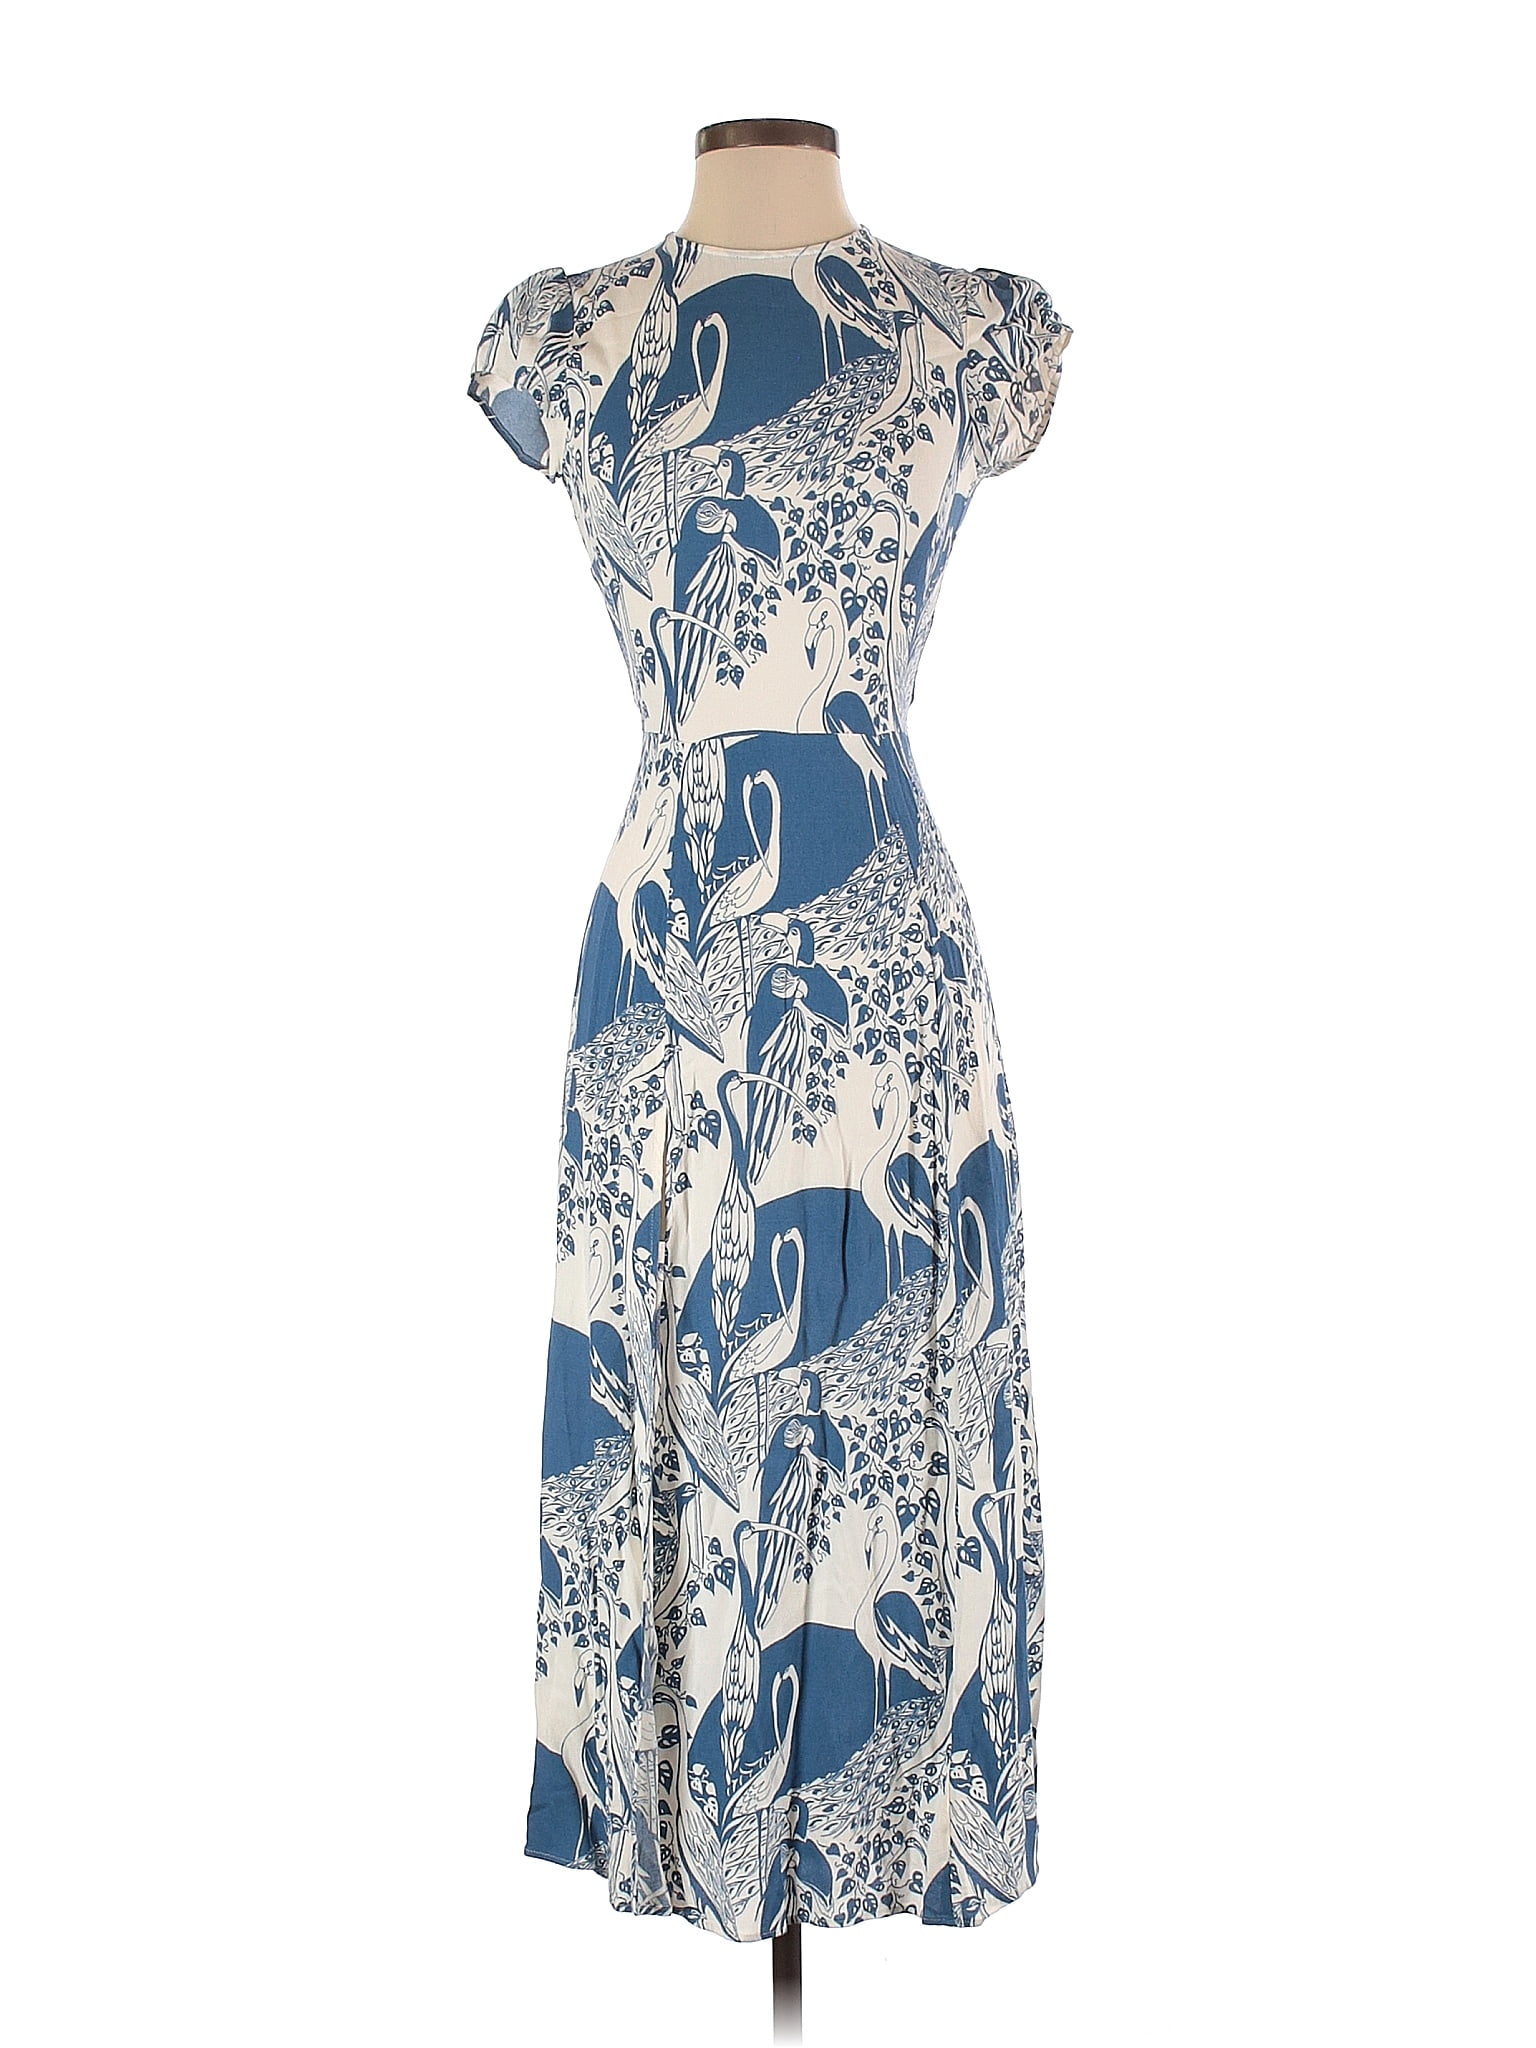 Reformation Multi Color Blue Casual Dress Size 4 - 52% off | thredUP